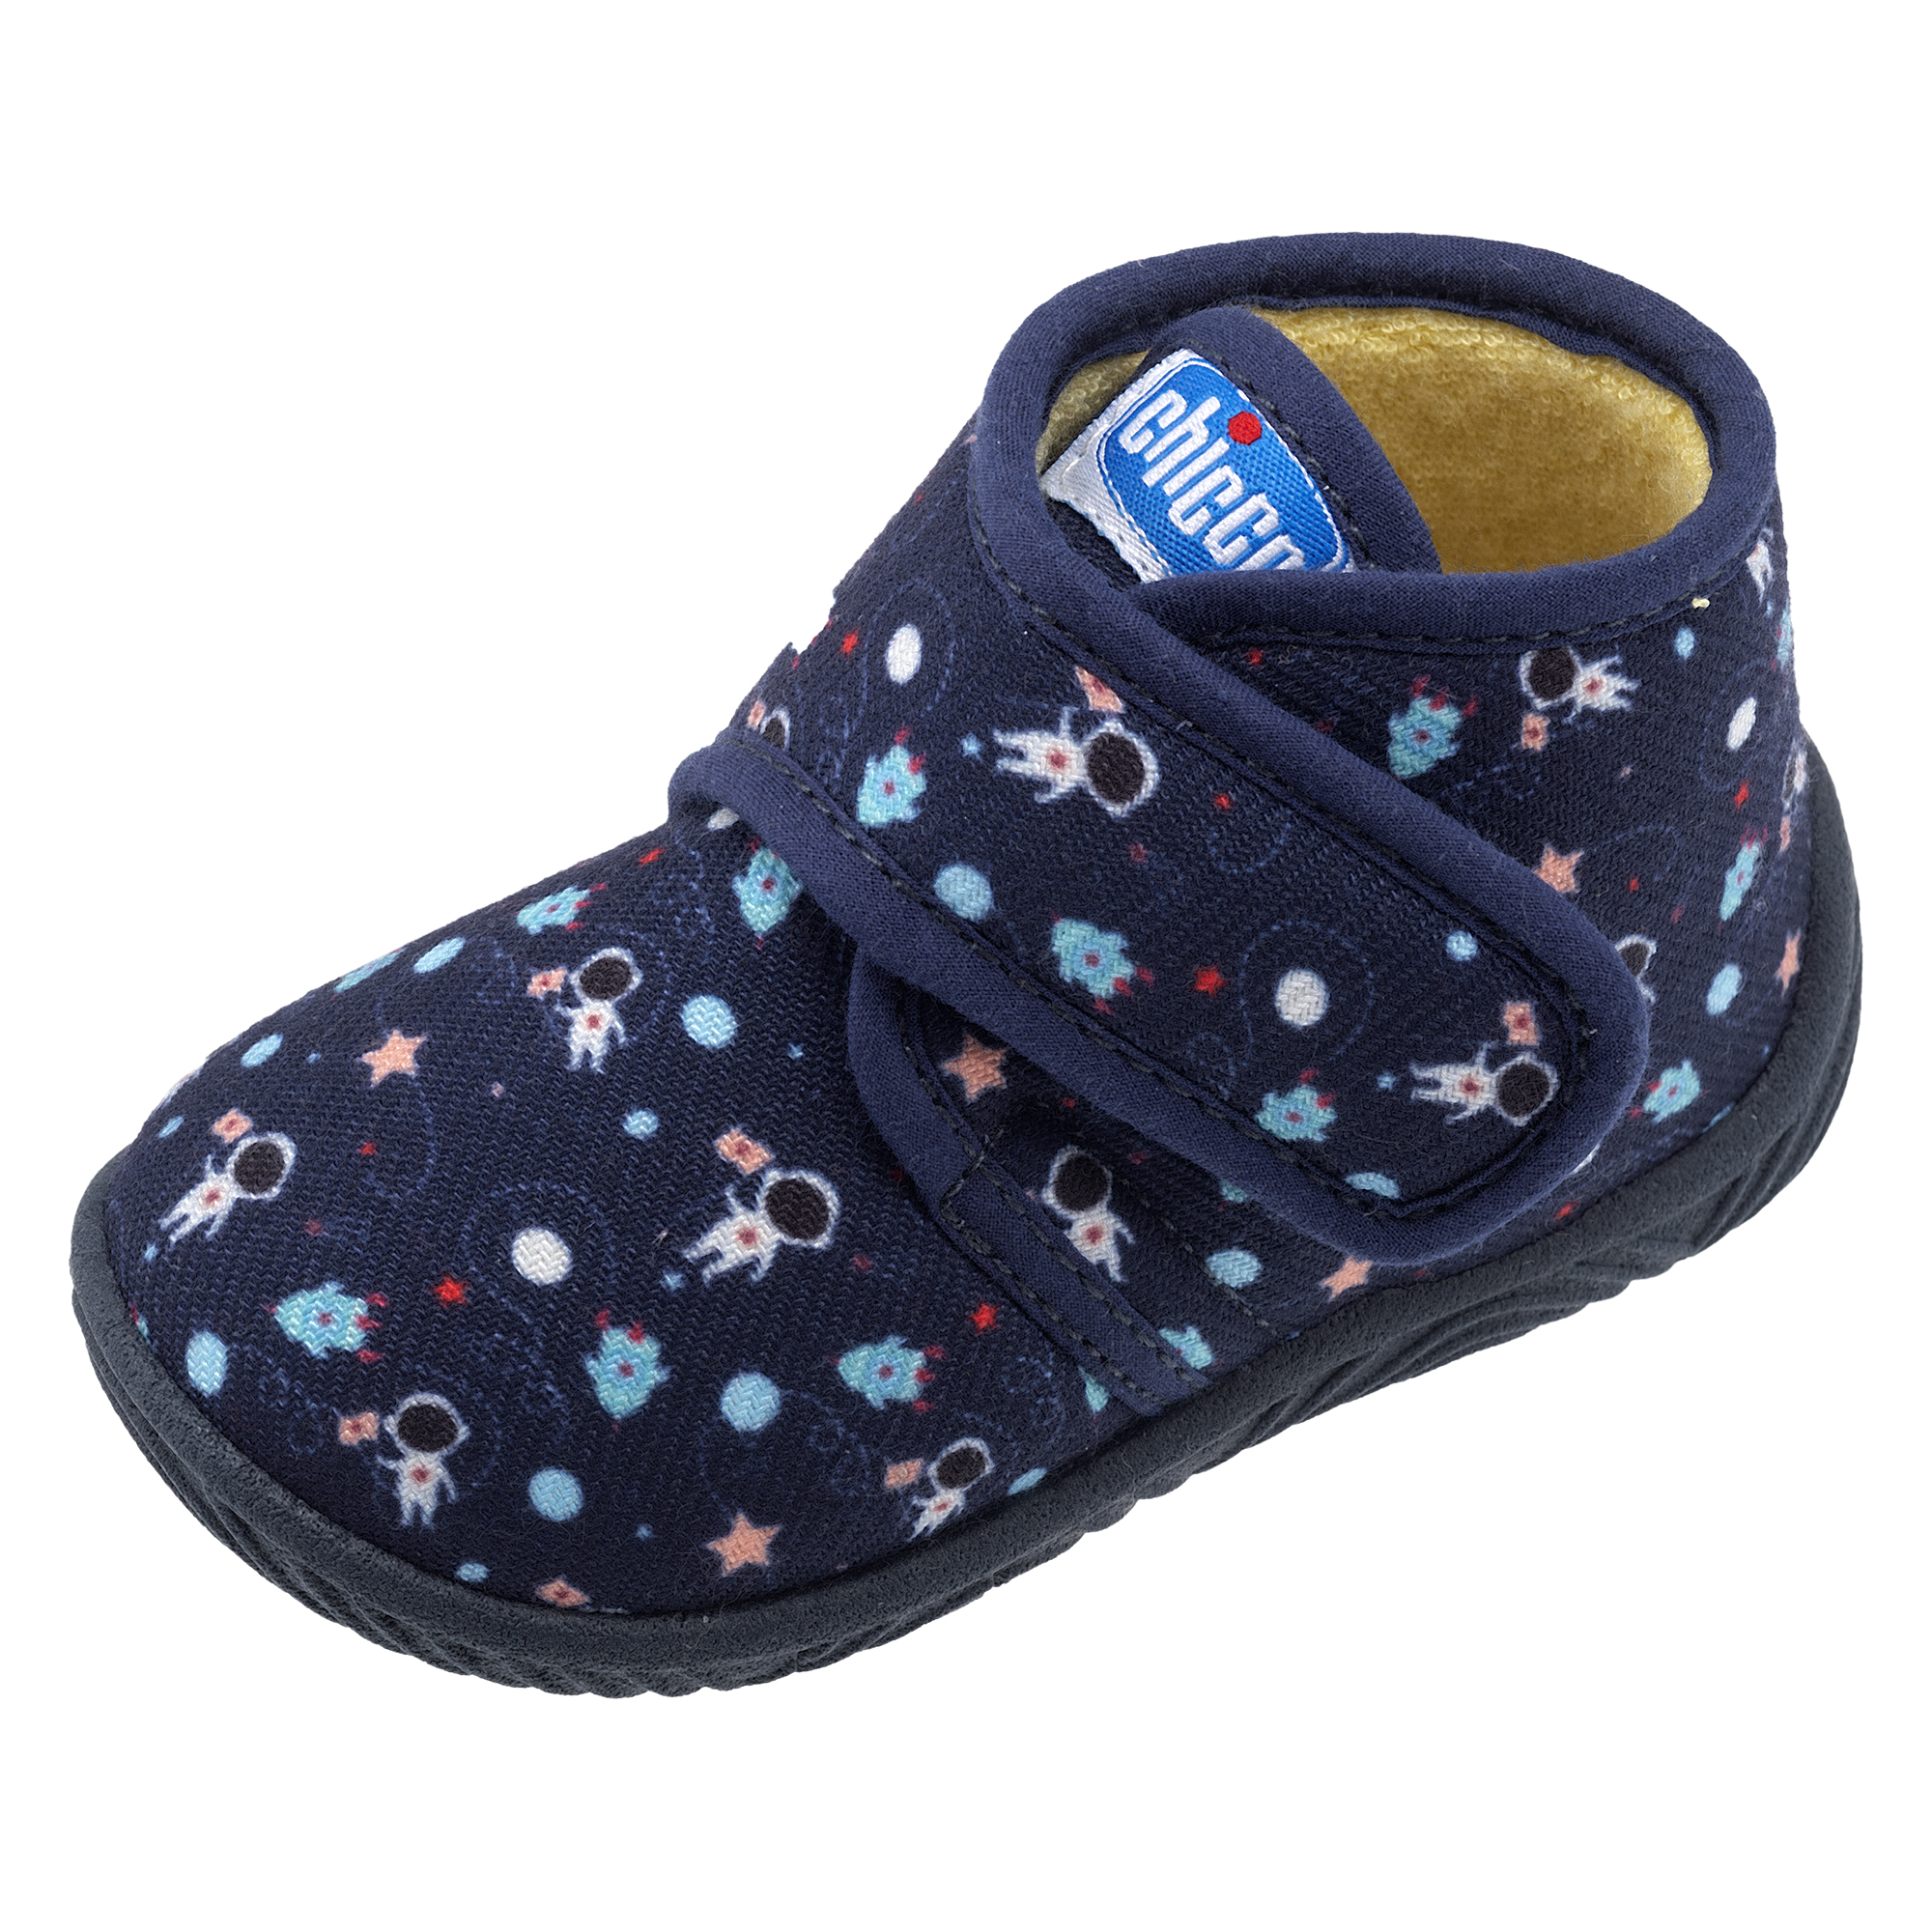 Pantof casa copii Chicco Taxo2, 66011-61P, bleumarin cu model, 20 66011-61P